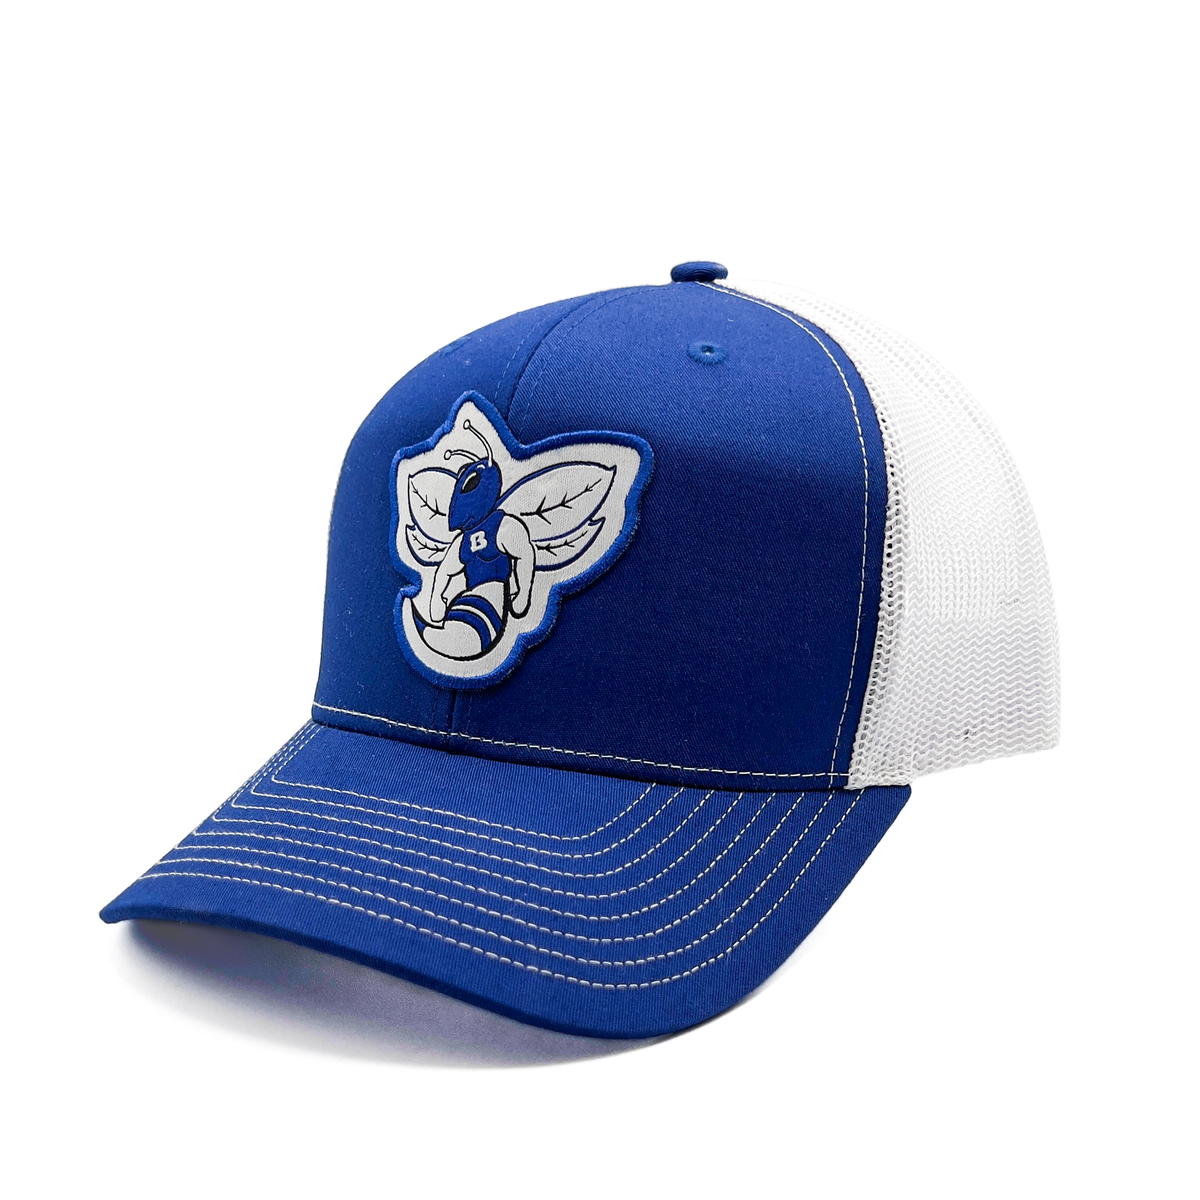 Bryant Hornets Logo Patch Hat